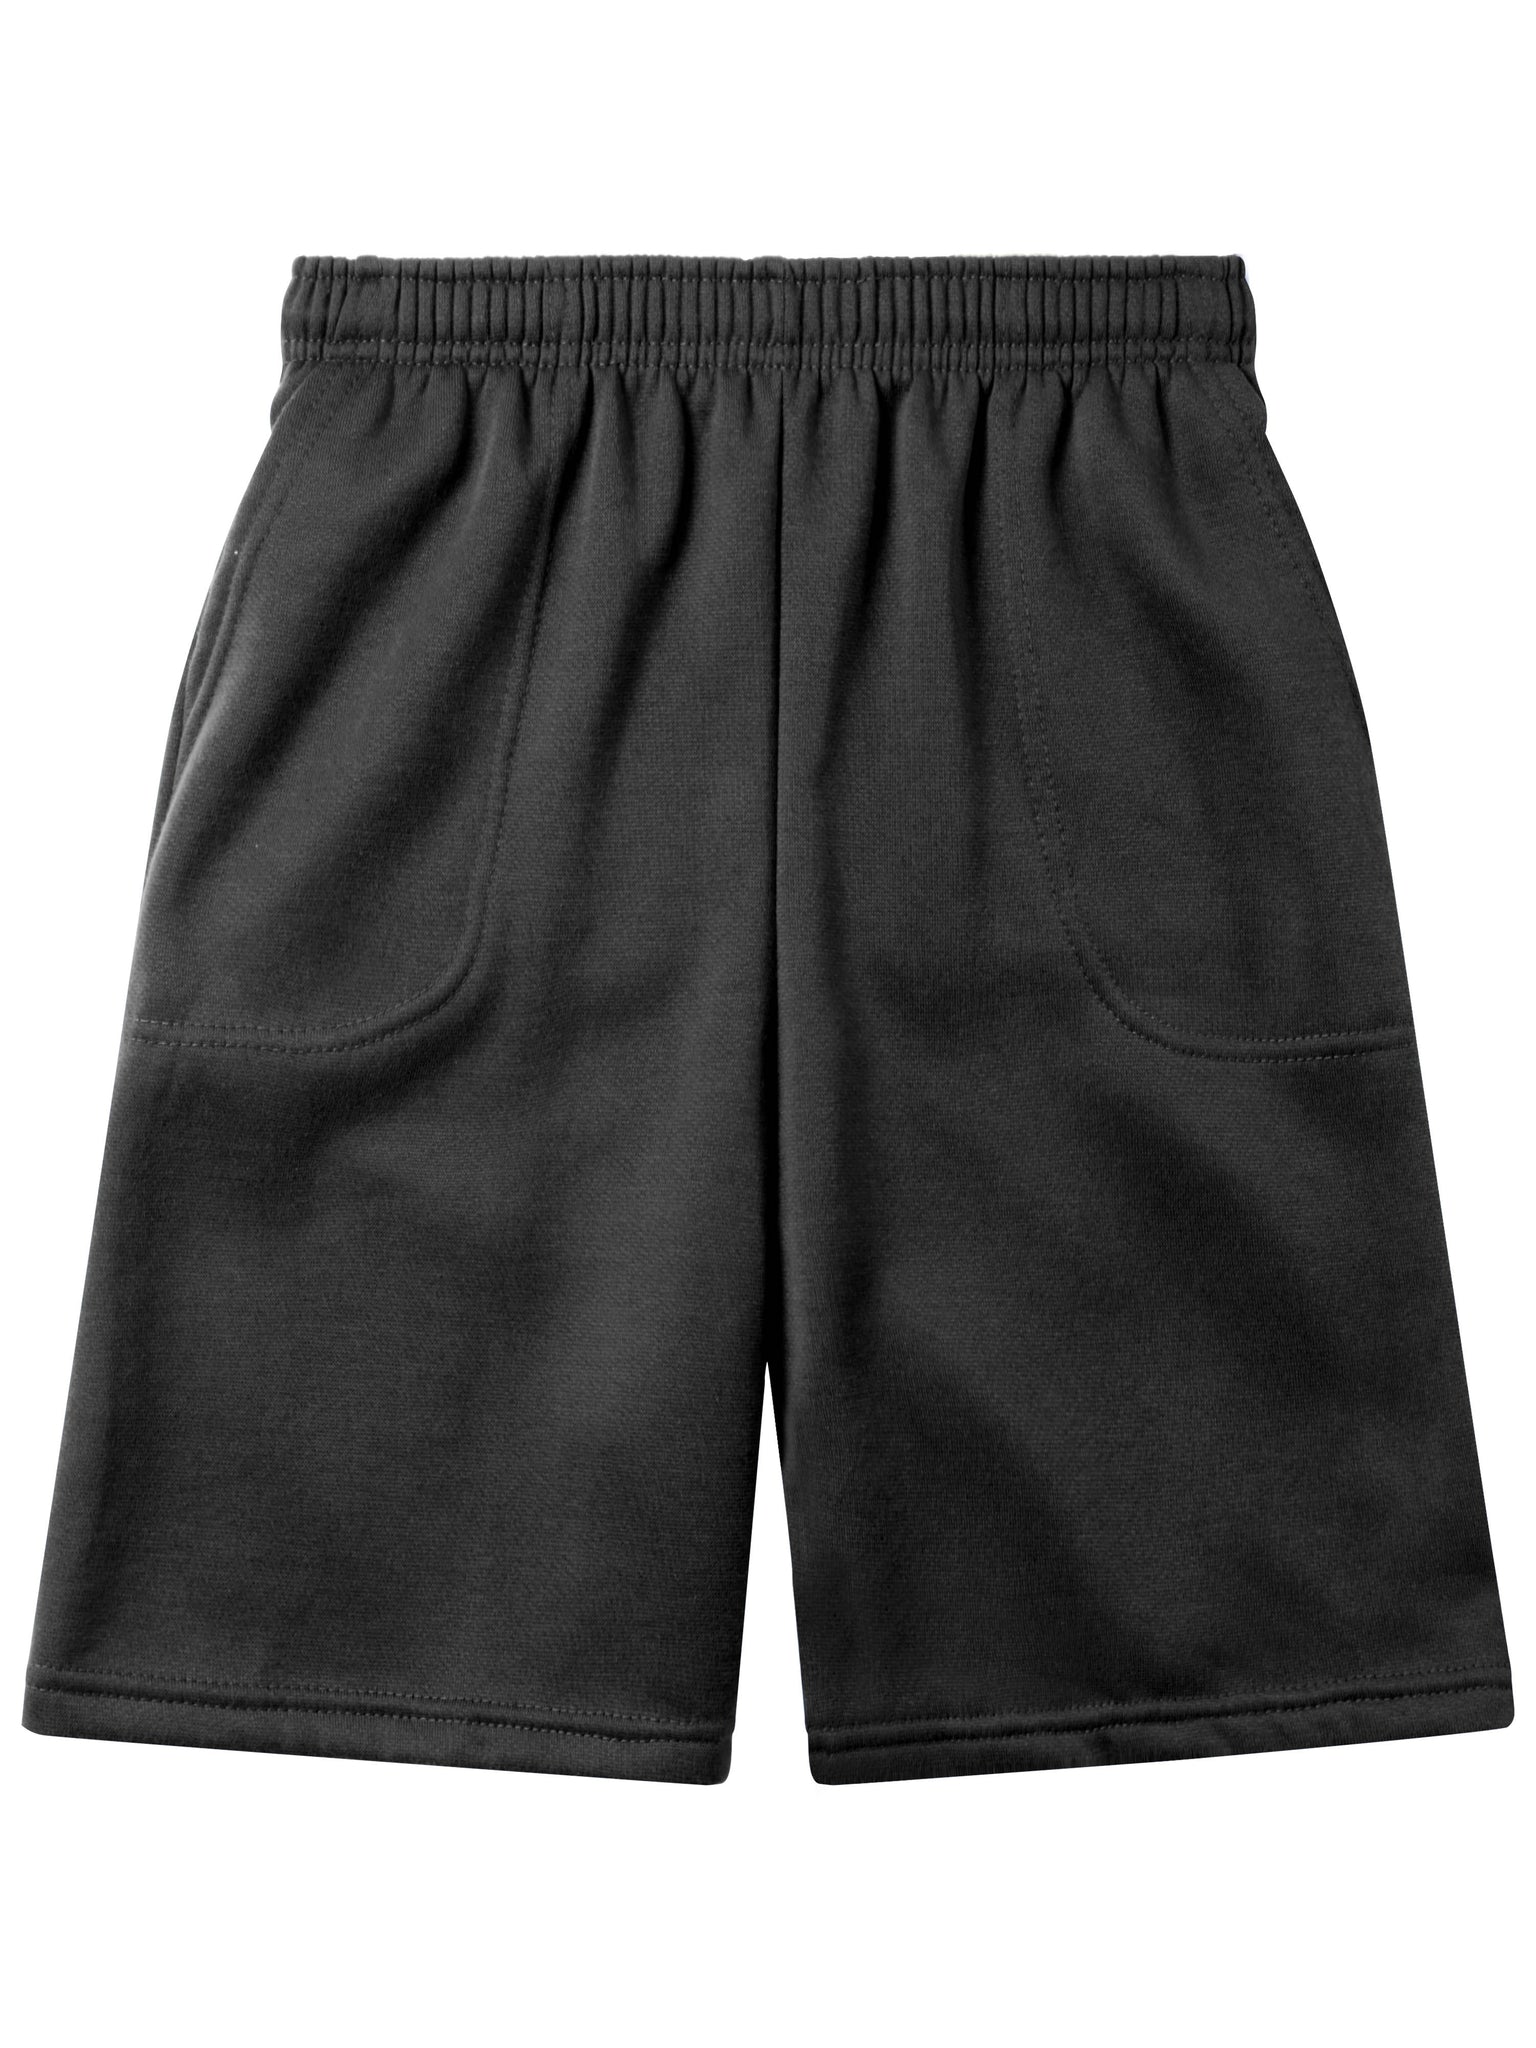 Mens Brushed Elastic Lightweight Sweat Shorts with Pockets - Men > Shorts >  Sweats